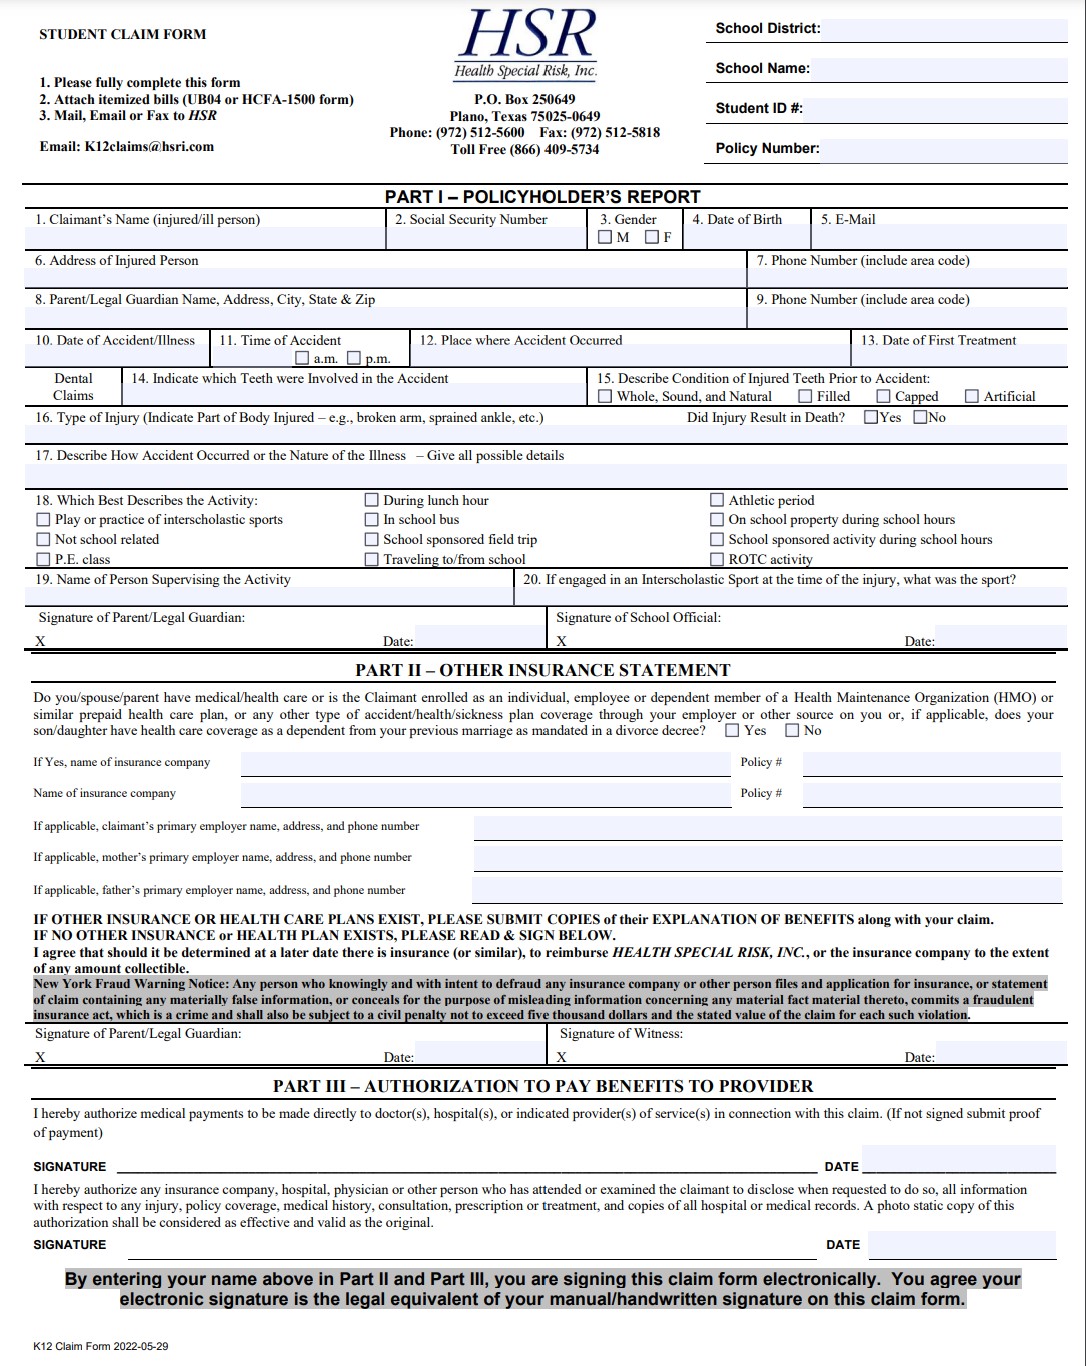 student insurance claim form